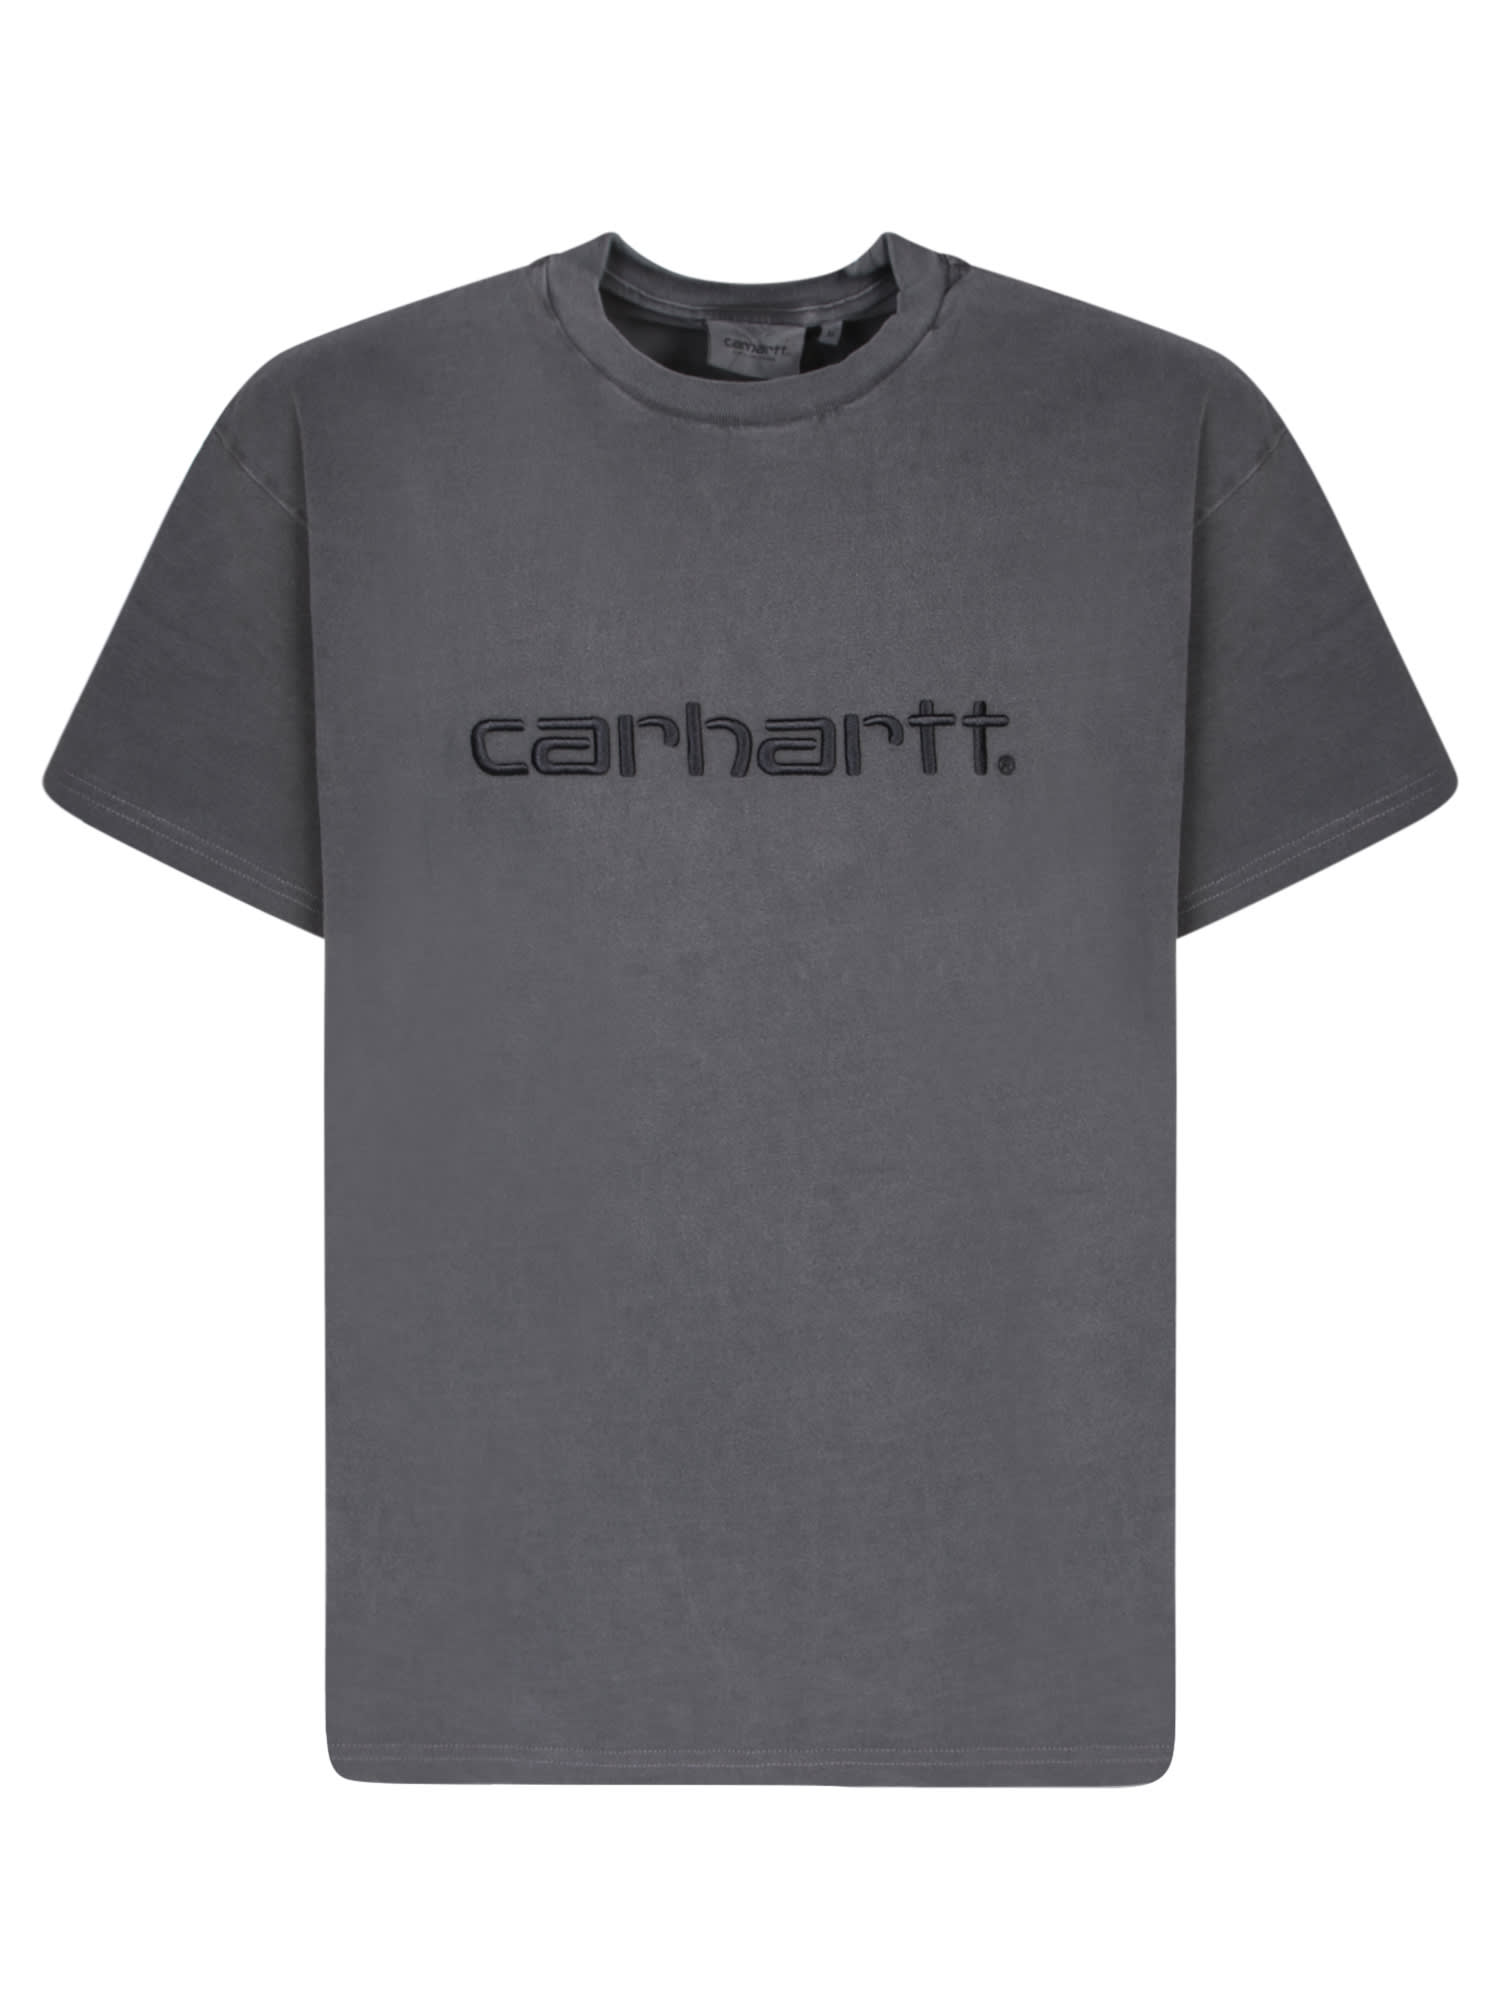 Carhartt Duster Black T-shirt